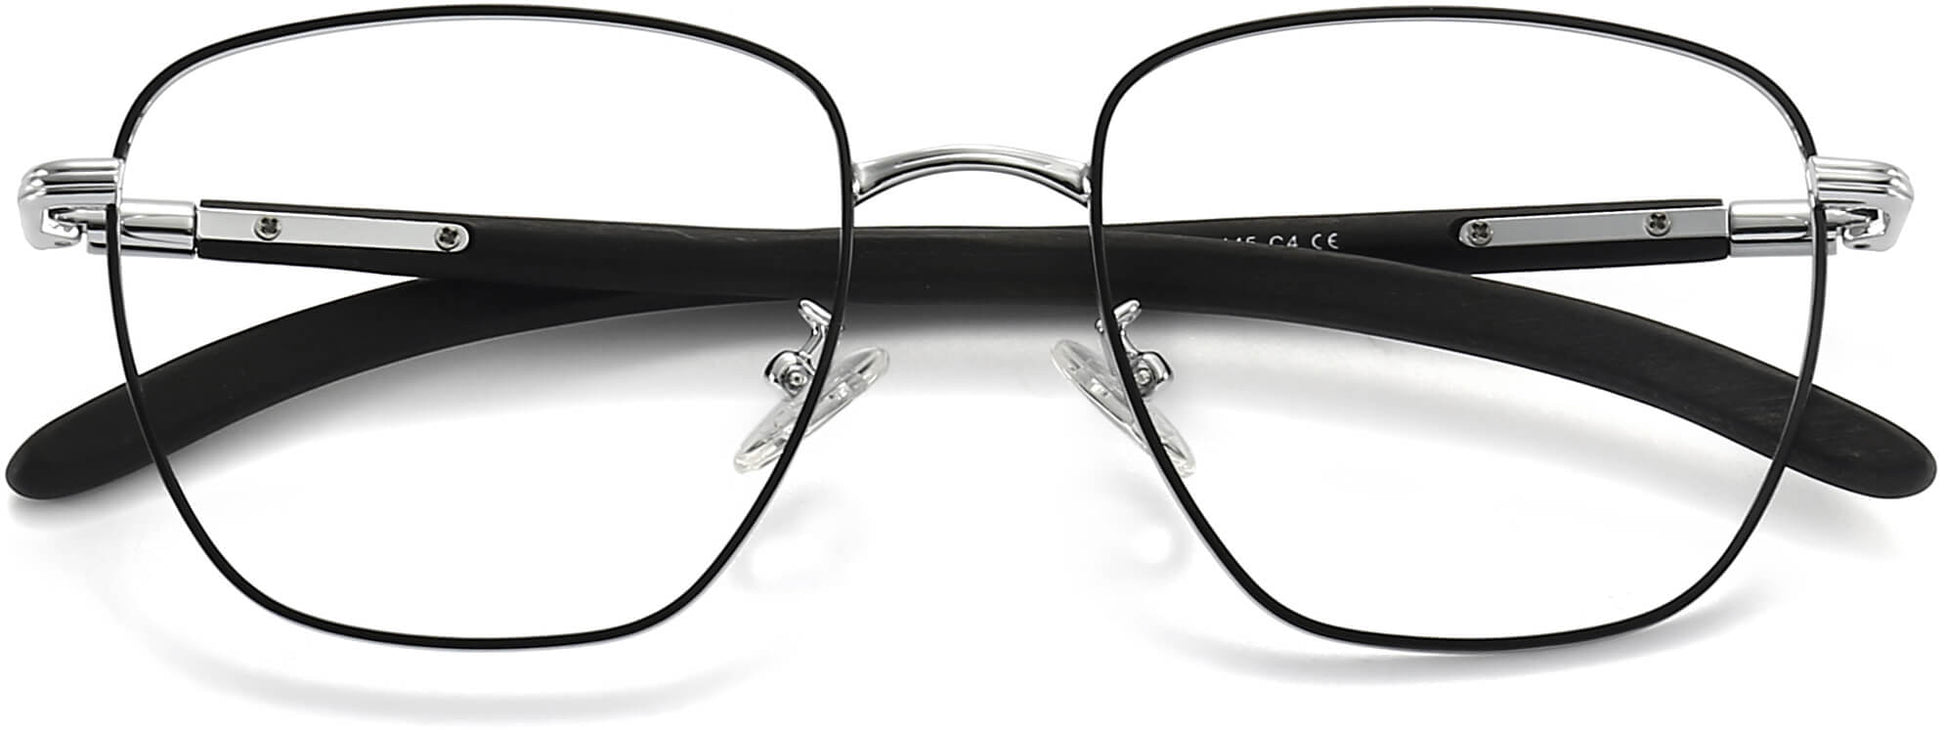 Bo Square Black Eyeglasses from ANRRI, closed view